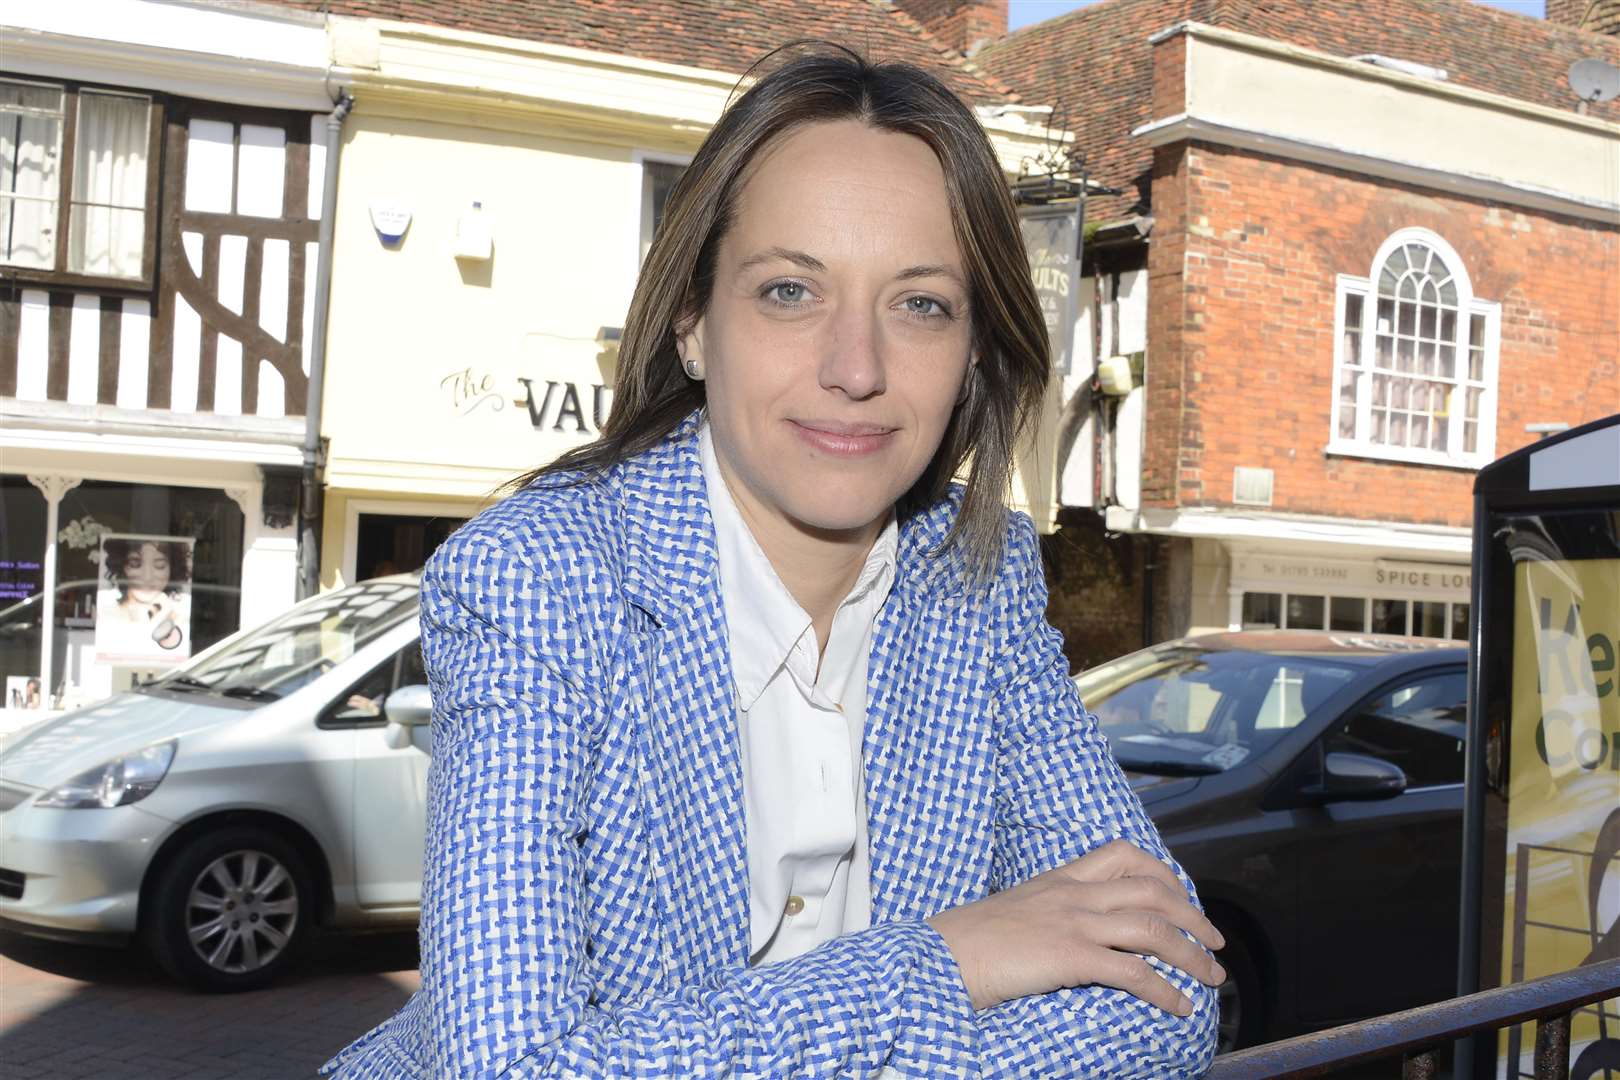 Faversham MP Helen Whately has concerns